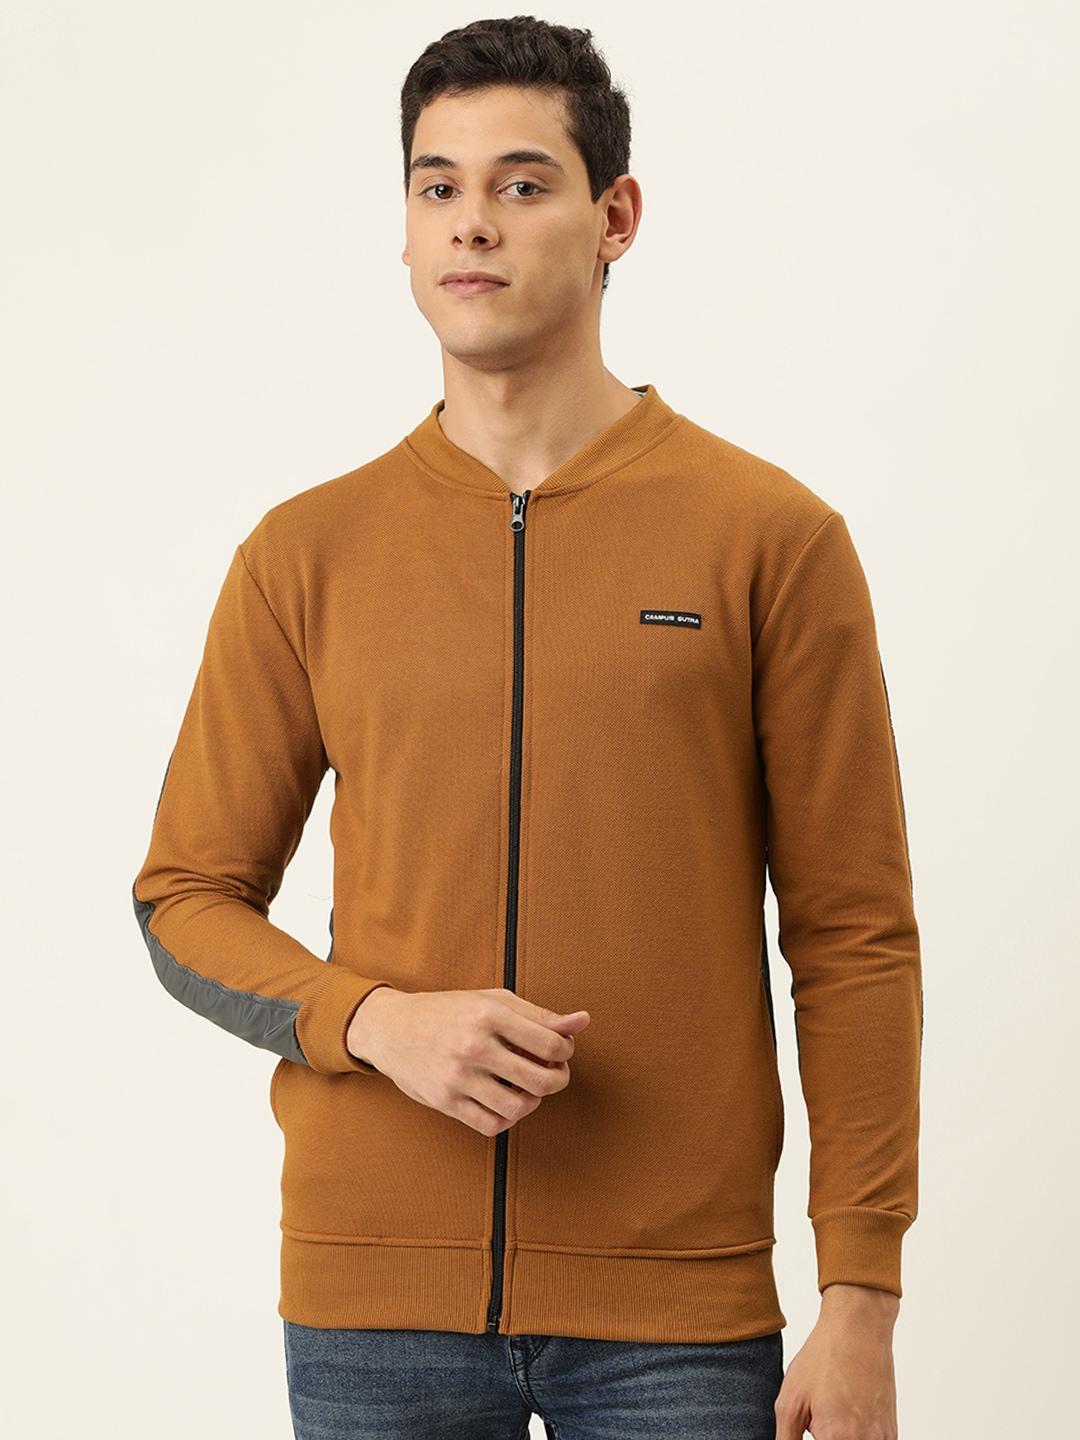 campus sutra men rust brown & charcoal grey melange colourblocked sweatshirt